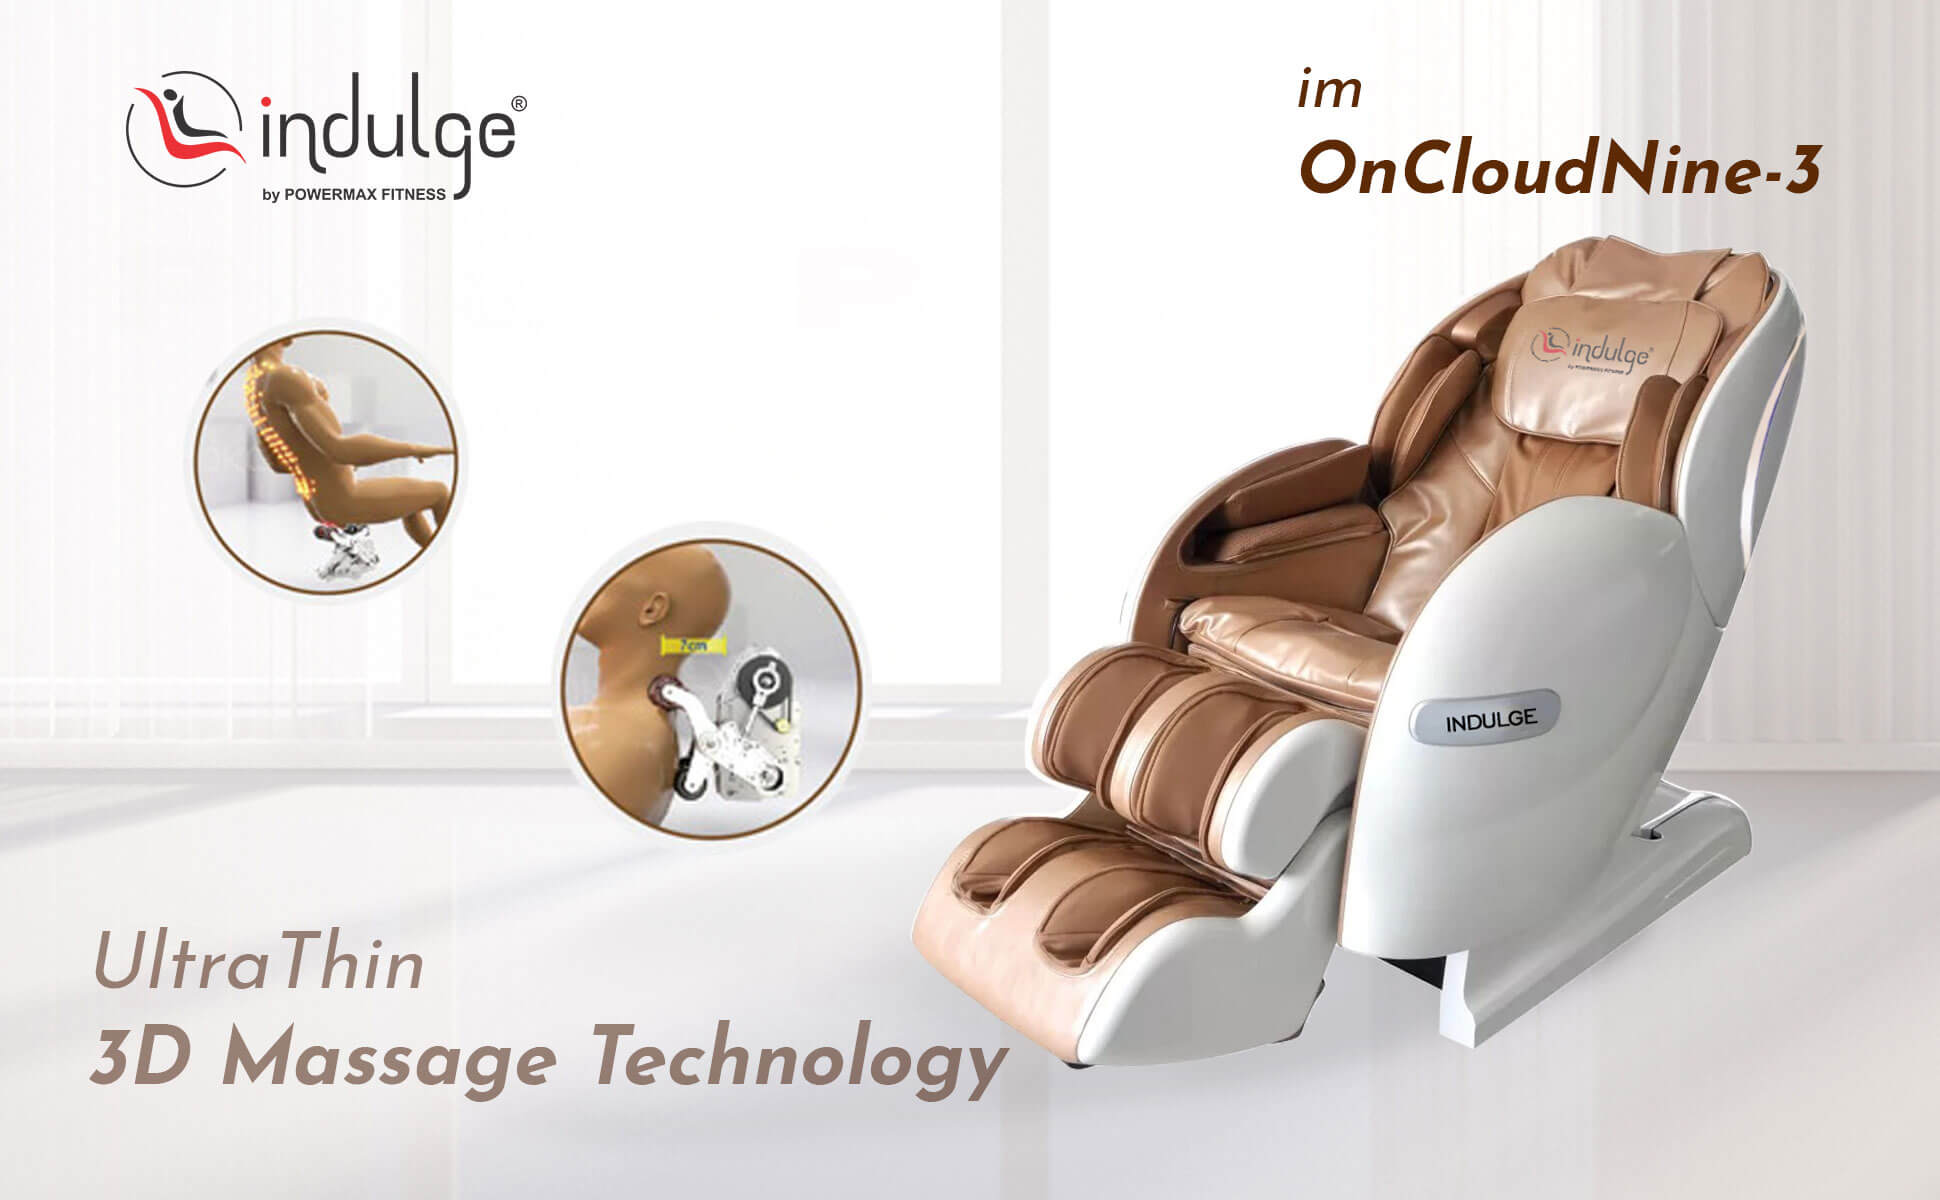 Indulge im-OnCloudNine-3 Full Body Massage Chair